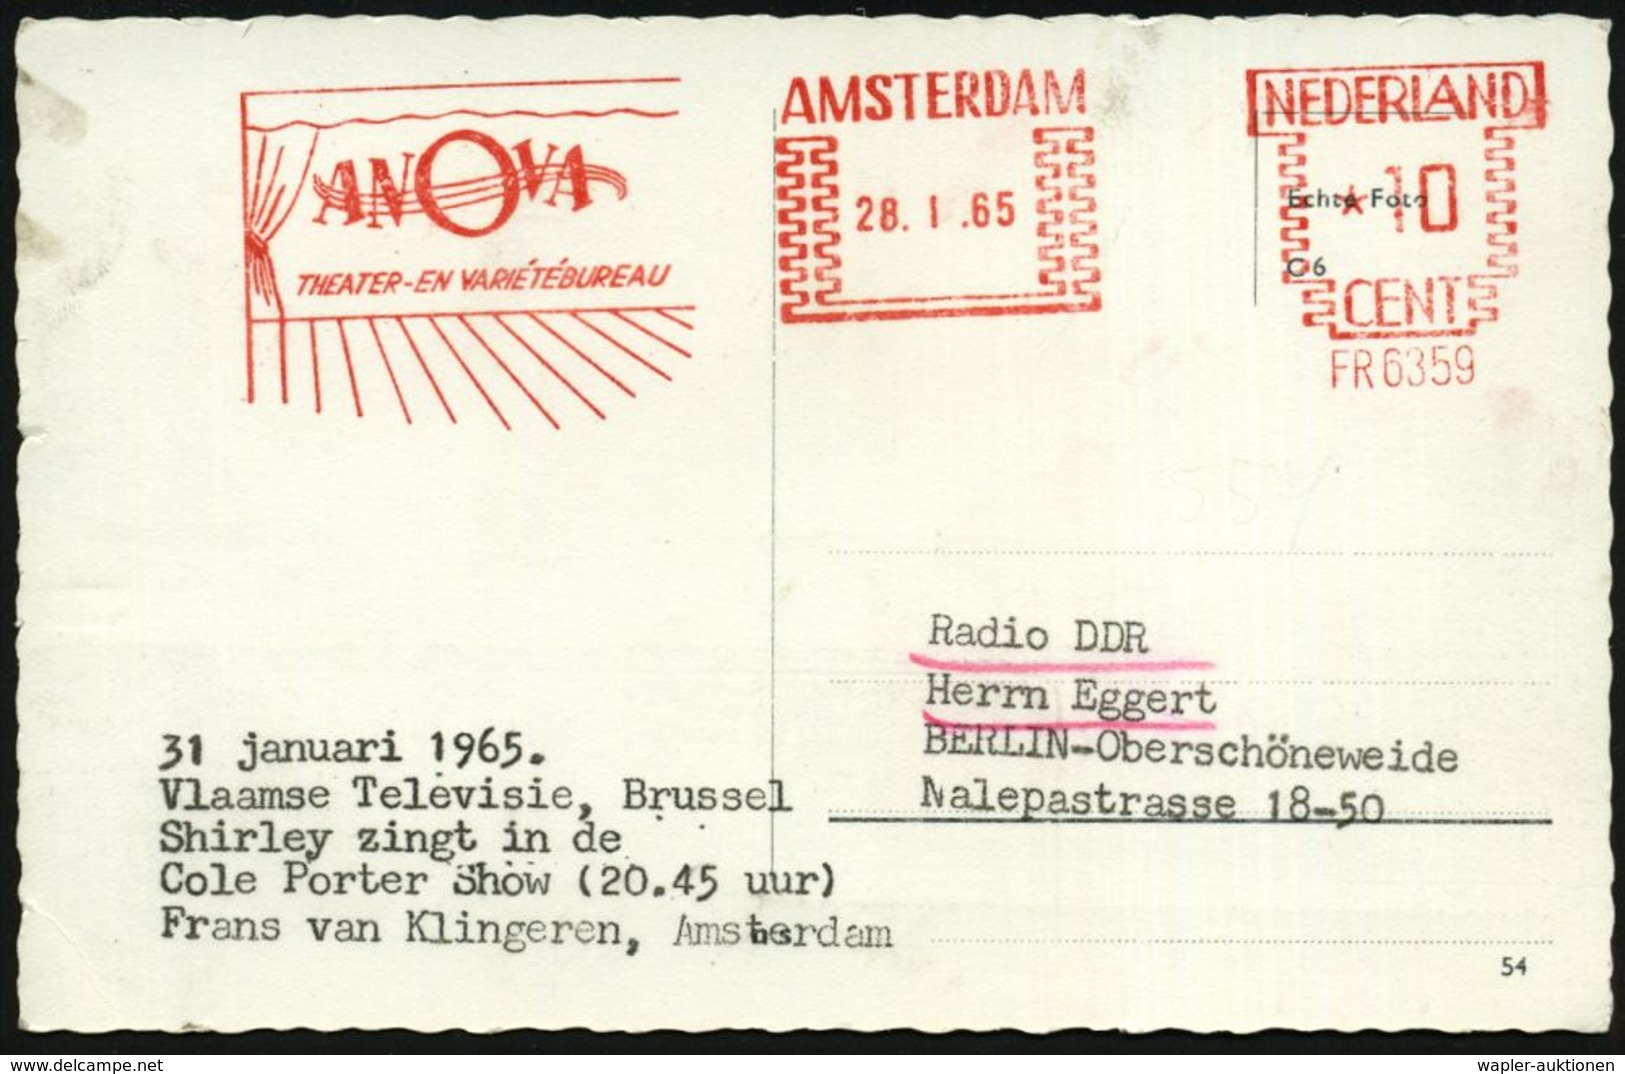 NIEDERLANDE 1965 (28.1.) AFS.: AMSTERDAM/FR 6359/ANOVA/THEATER-EN VARIETEBUREAU (Bühne) Bedarfs-Ausl.-Ak. "Cole Porter S - Circo